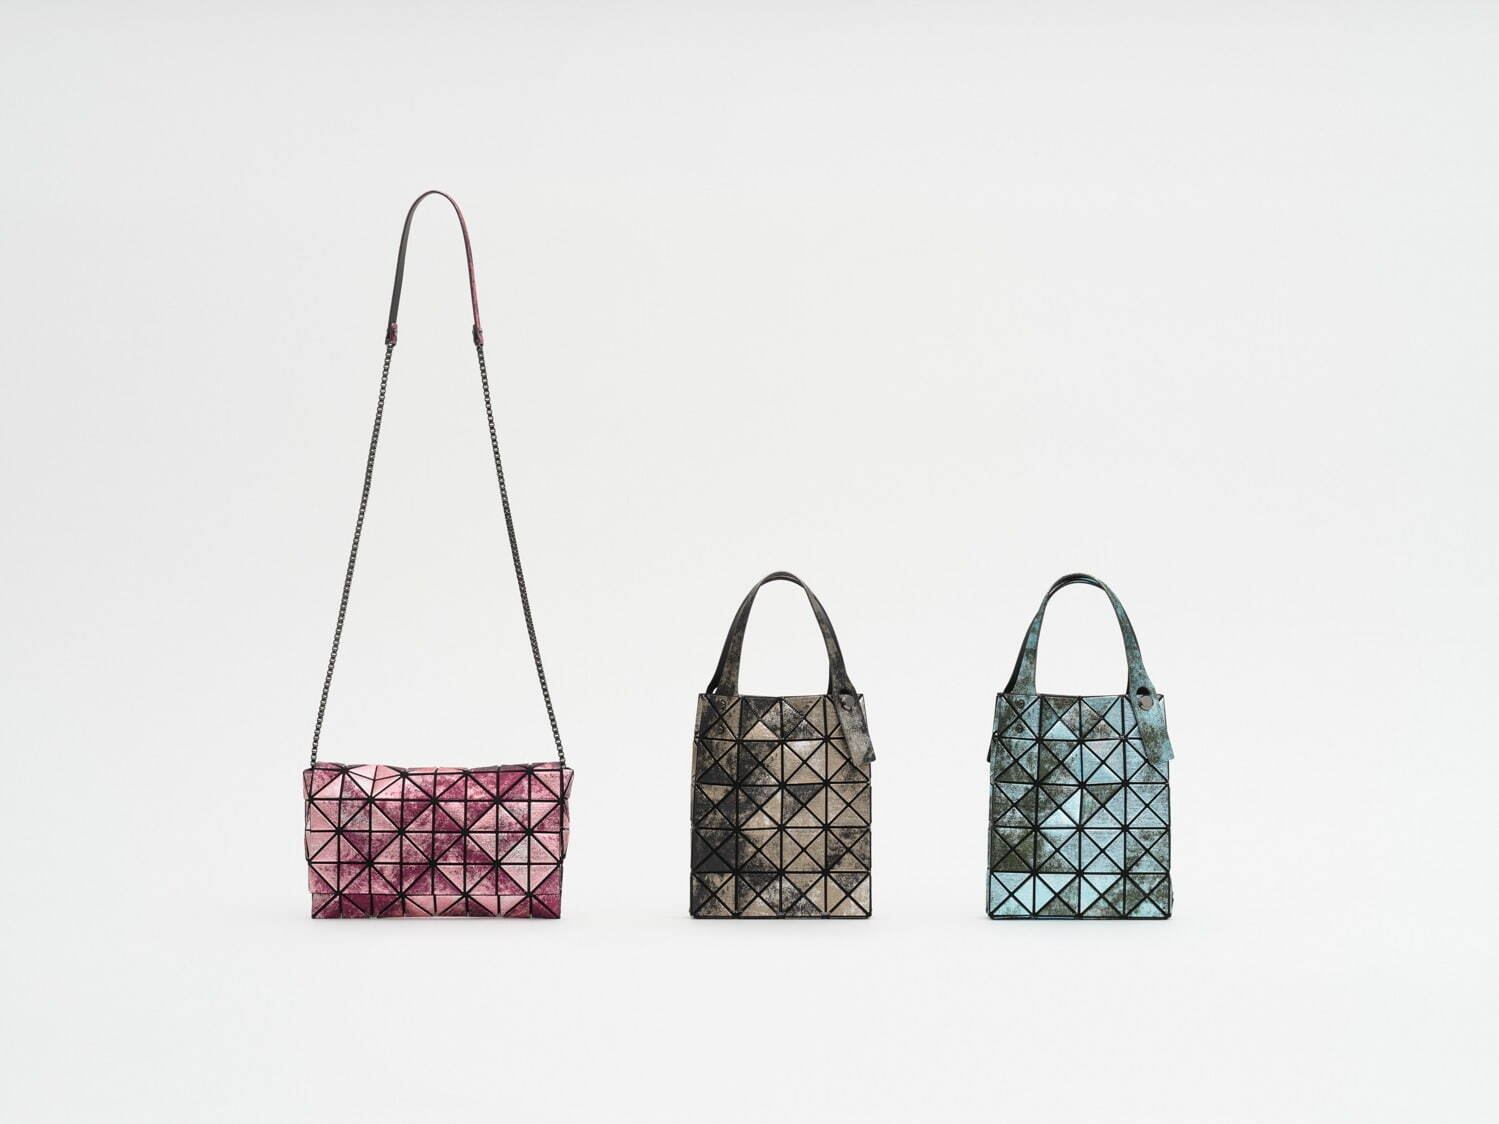 ＜PLATINUM NEBULA＞
左から)「Shoulder Bag」 91,300円「Mini Tote Bag」 77,000円